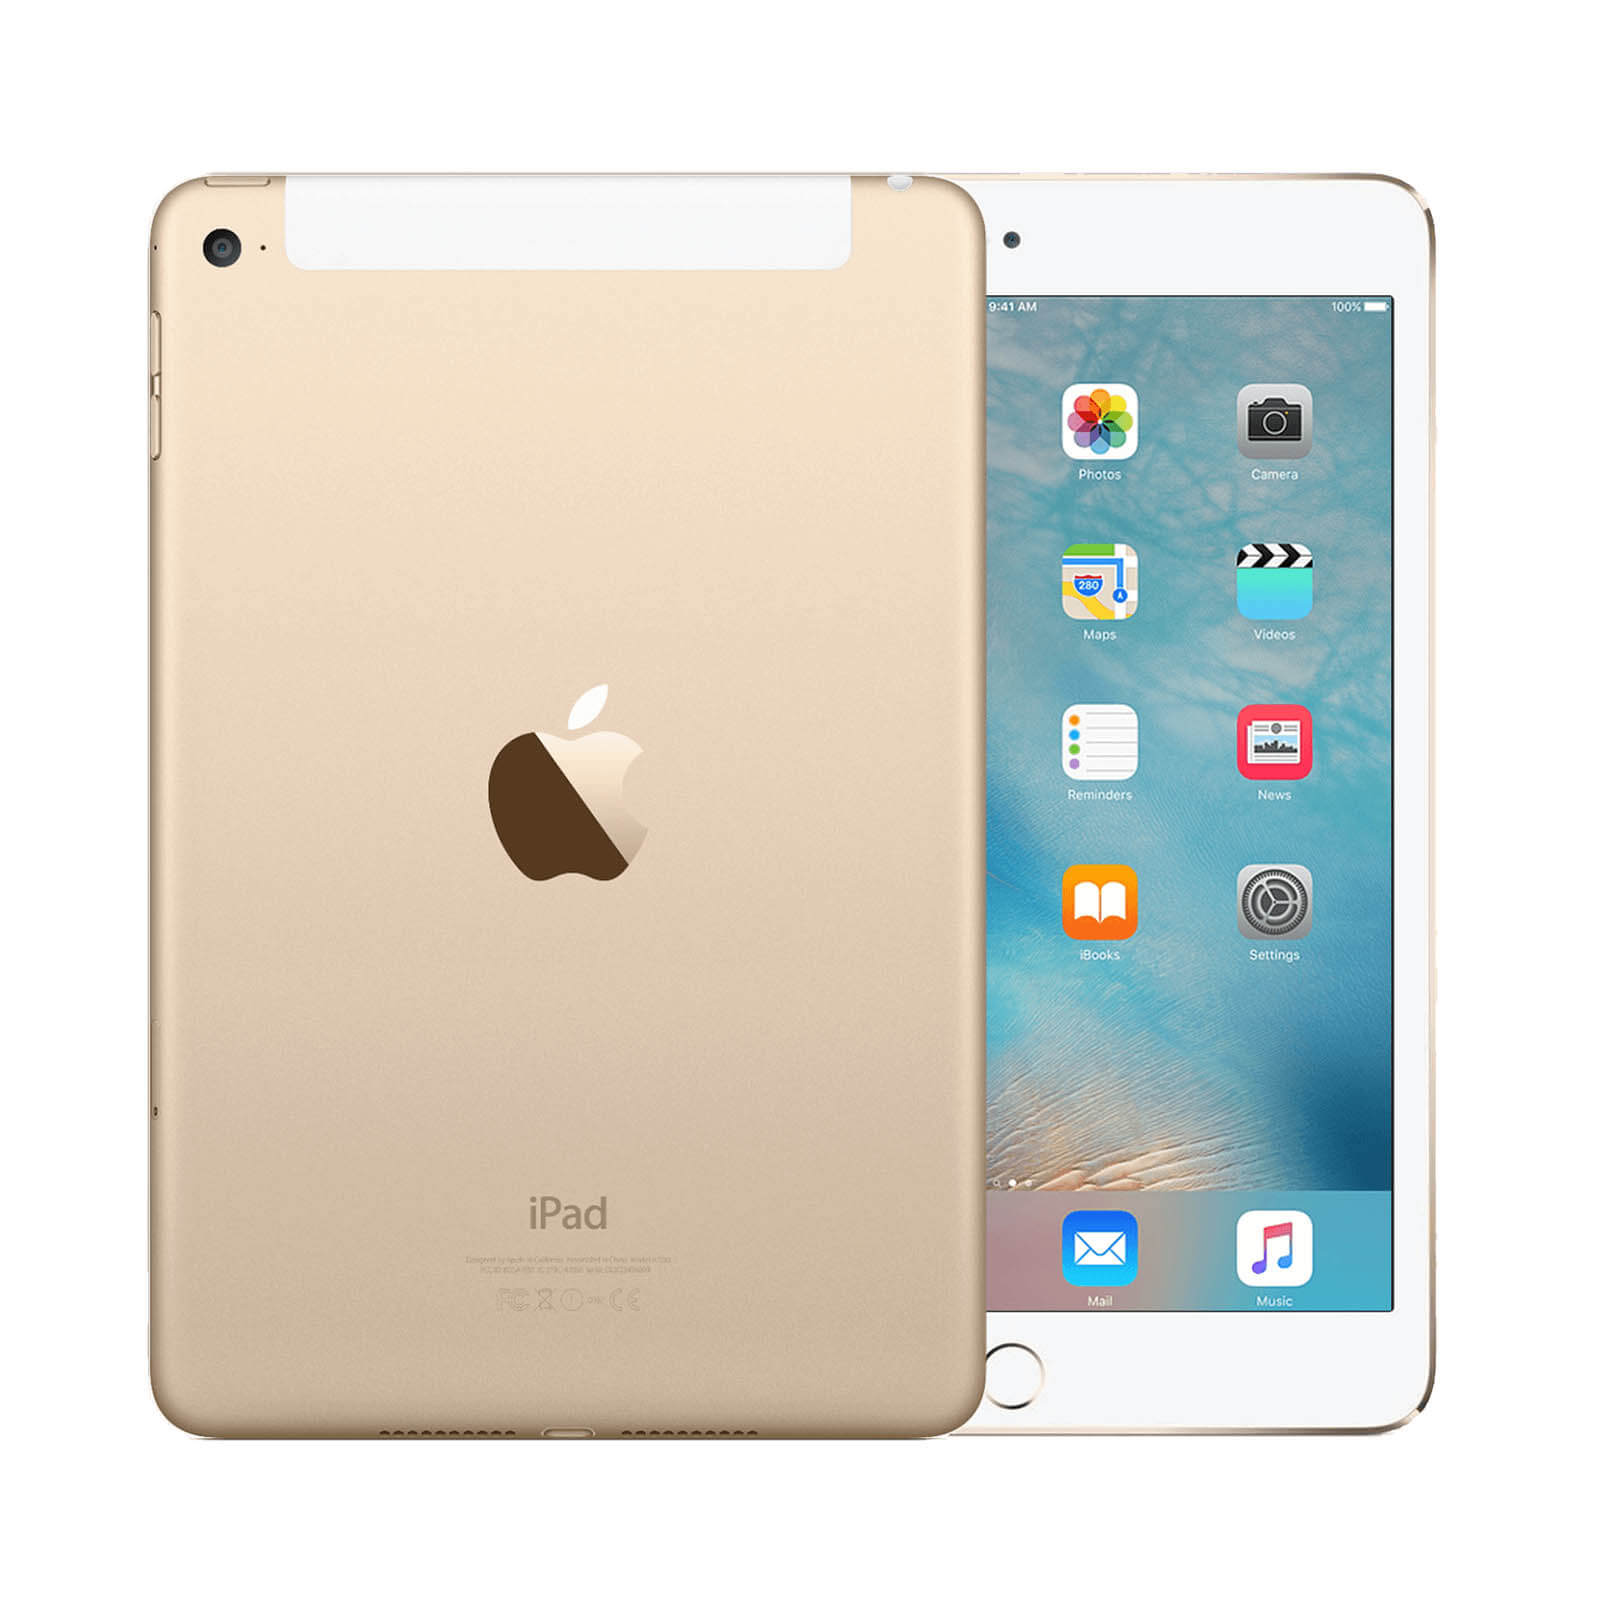 Apple iPad Mini 4 16GB Gold WiFi & Cellular - Very Good 16GB Gold Very Good